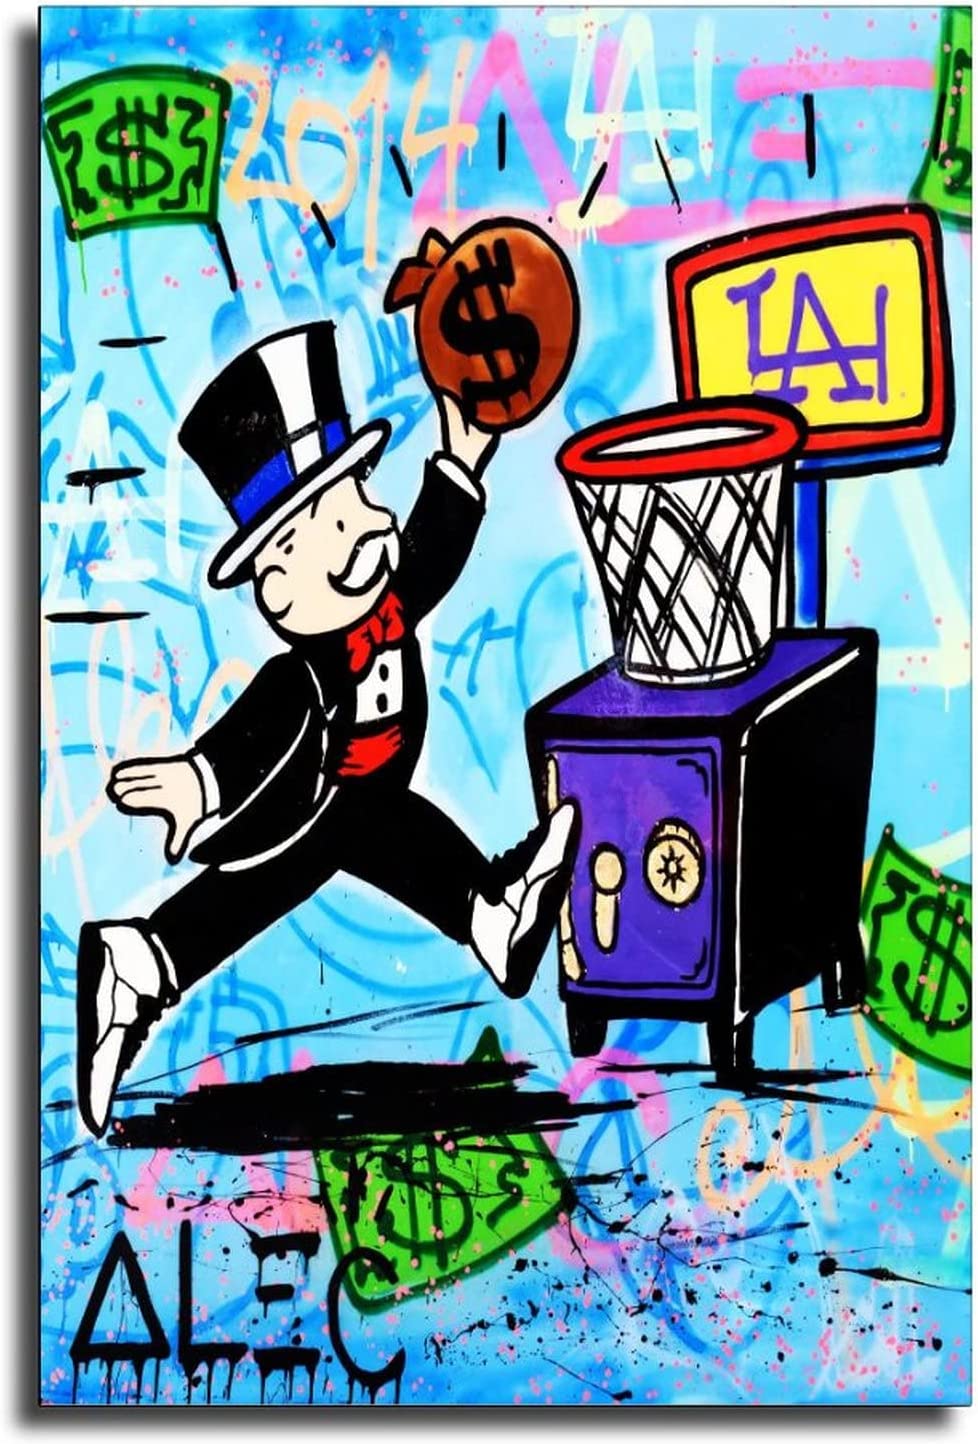 LARGE 11X14 - Designer LV Monopoly Man Poster - Glam Fashion Design - Urban  Street Art - Graffiti Wall Art Print - Room Decoration for Dorm, Office